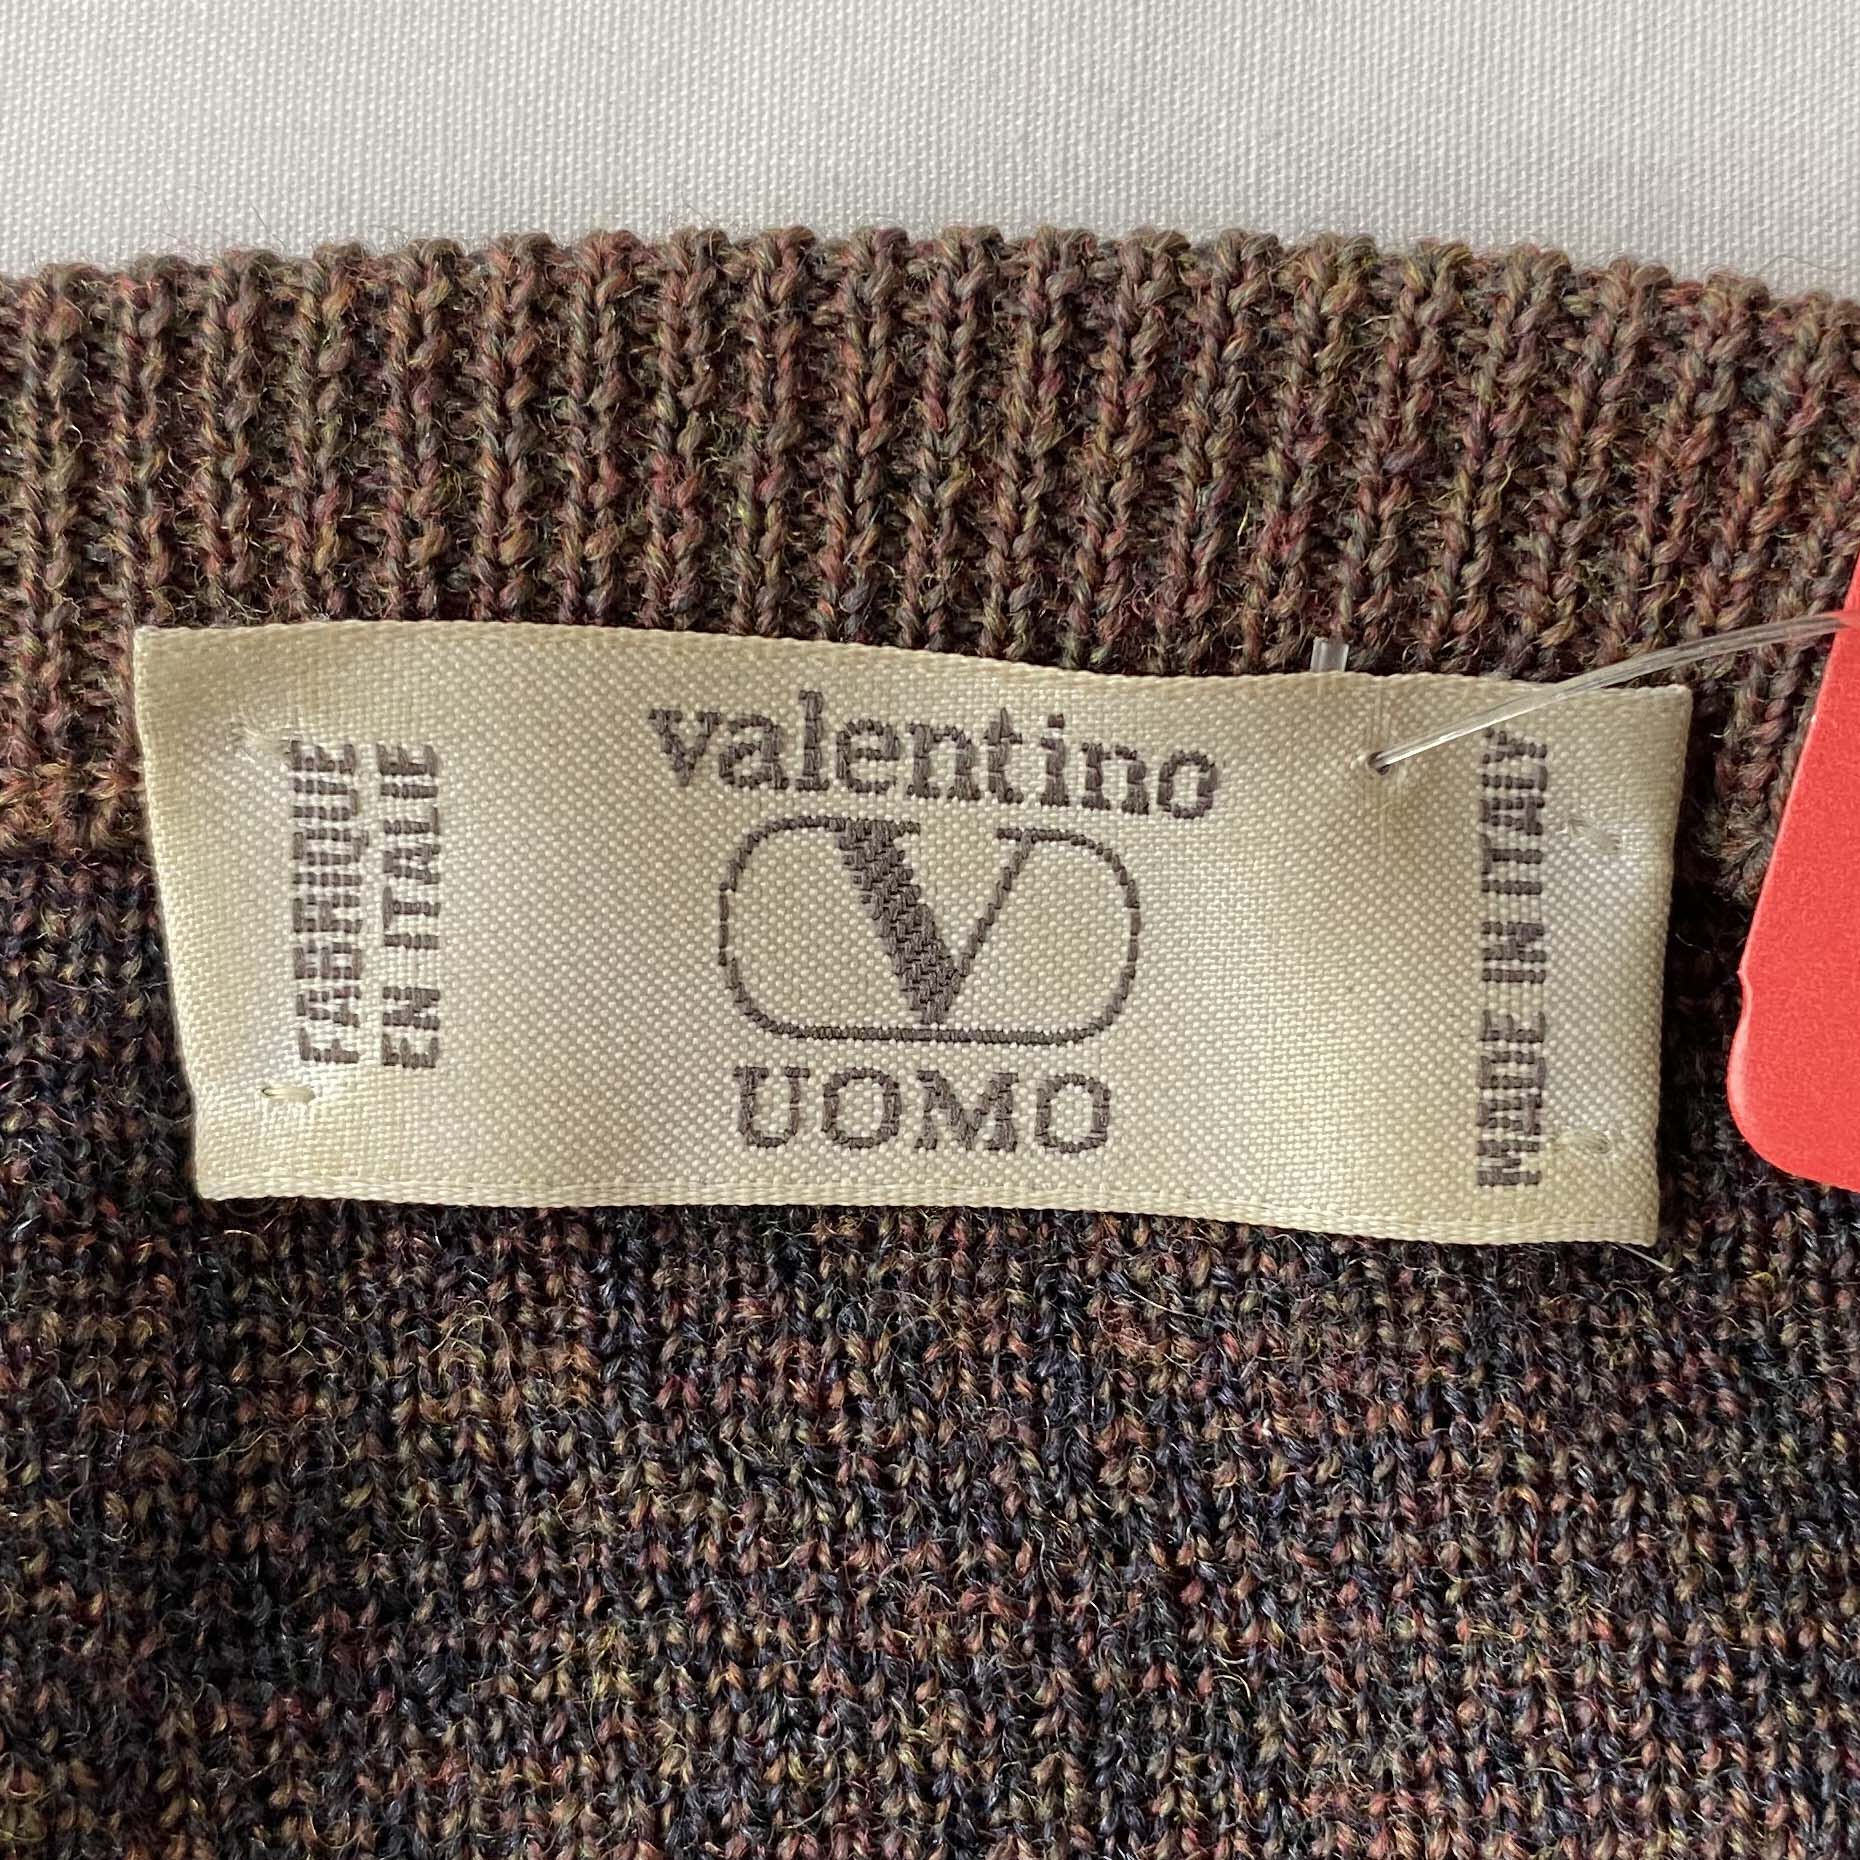 VALENTINO Dark Brown Sweater